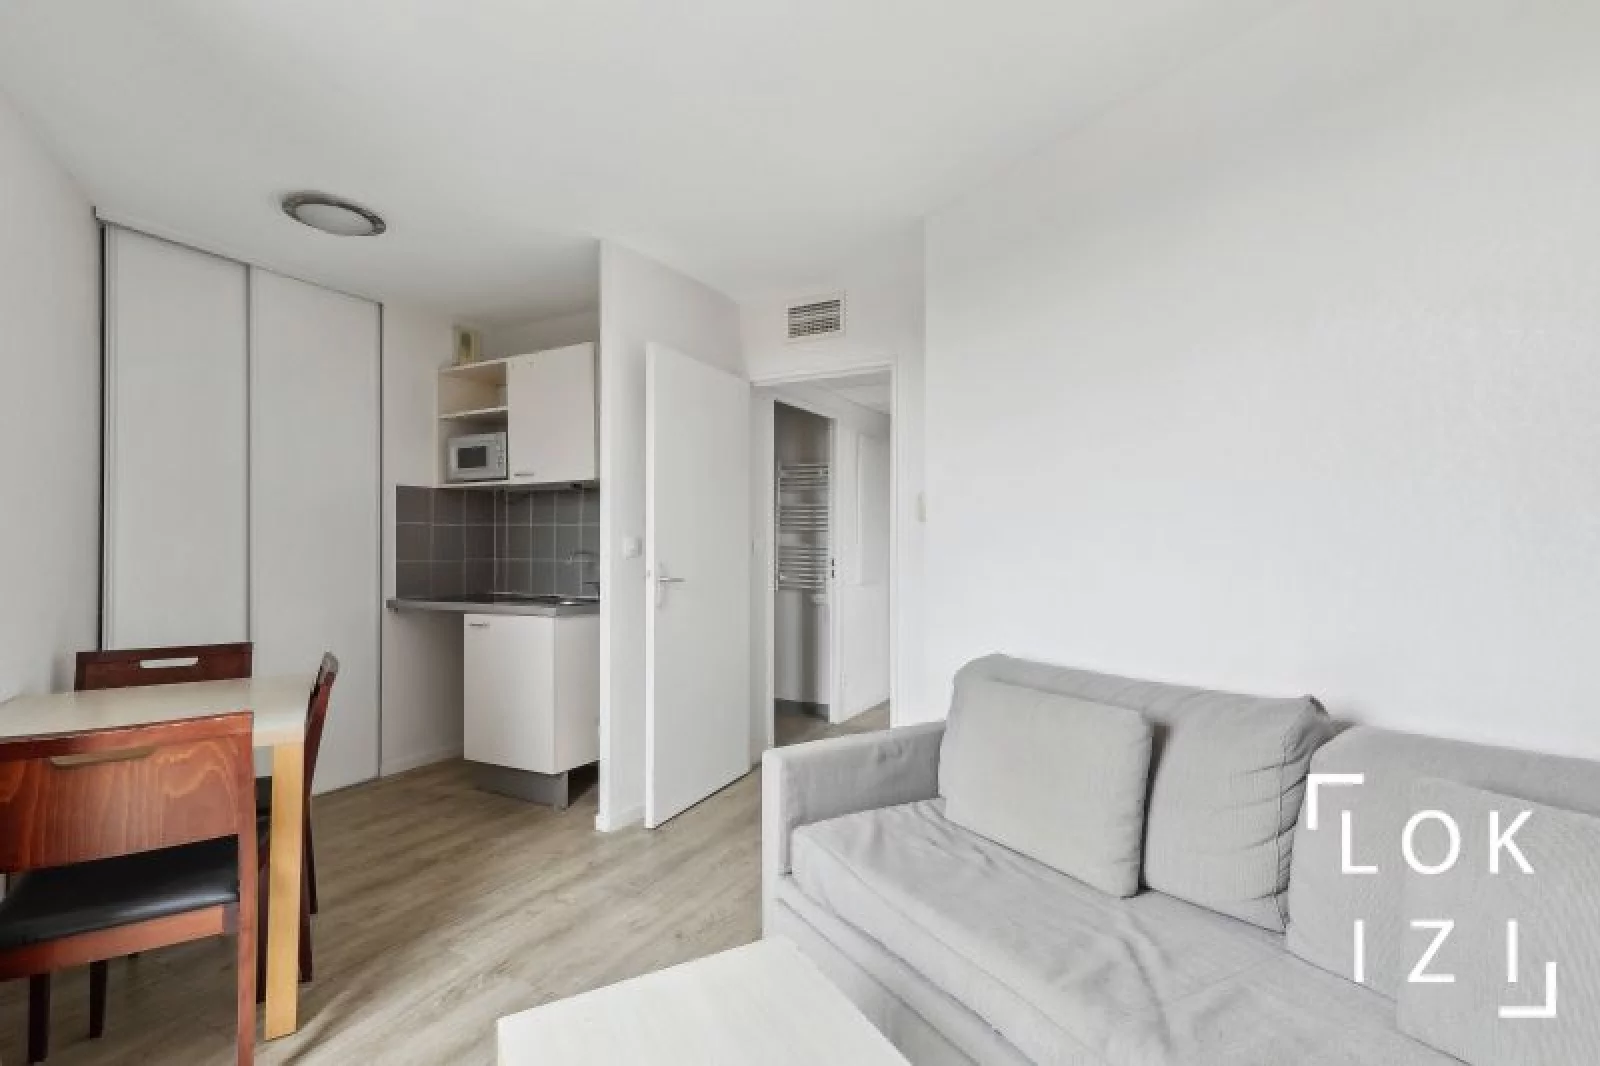 Vente appartement 2 pièces 28m² (Avignon - gare TGV)